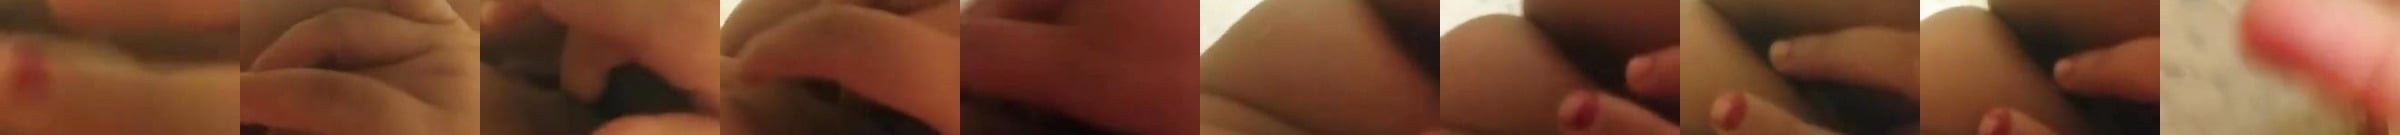 Somali Girl Twerking Nude Free Nude Vista Porn Video XHamster